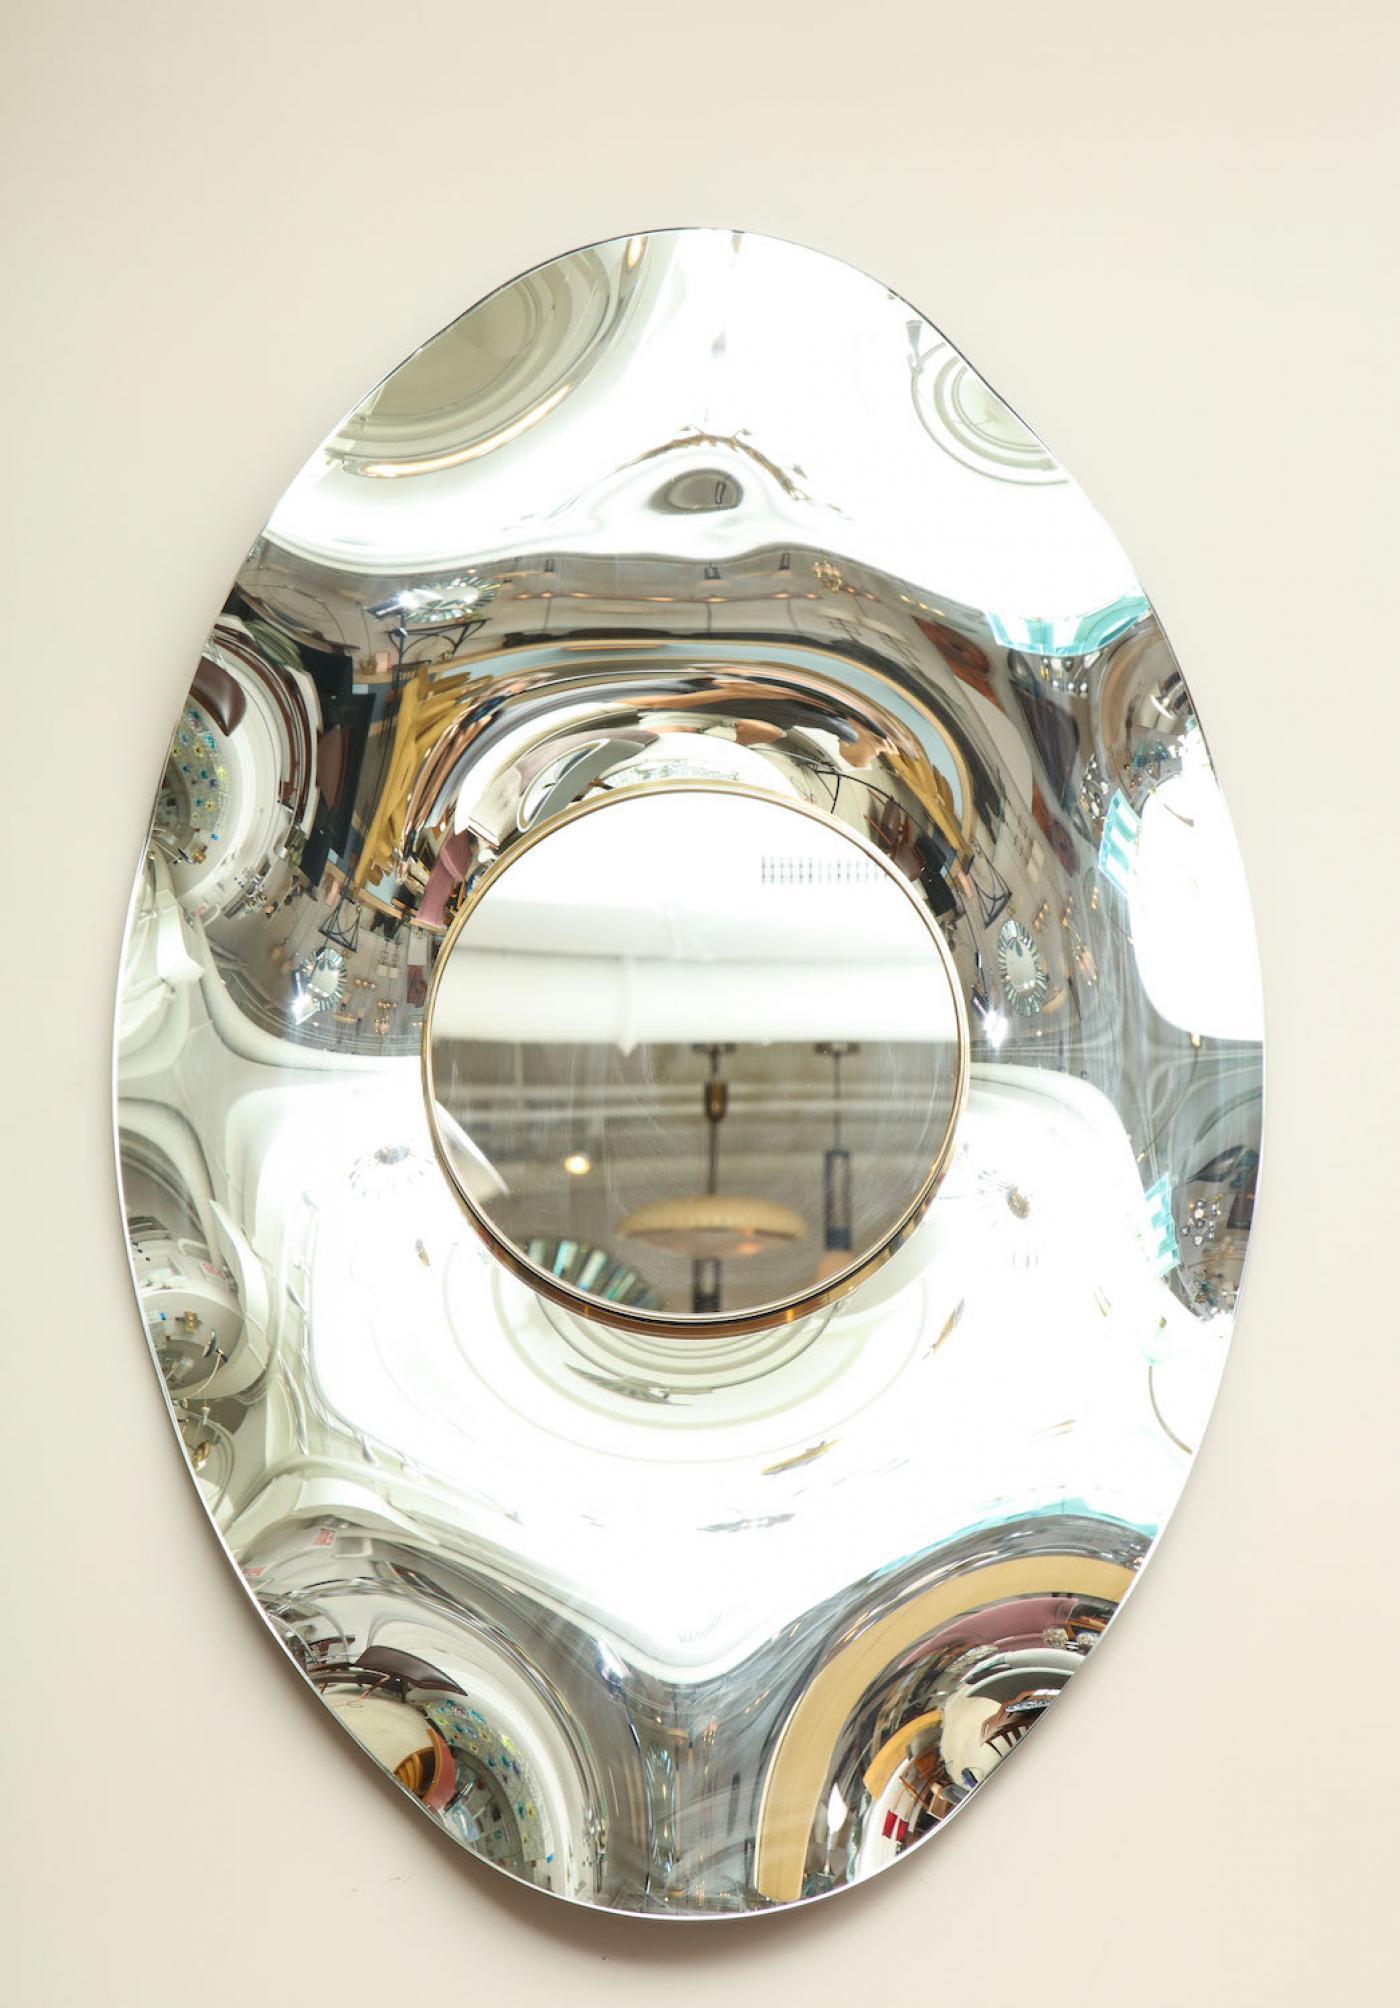 Italian Undulate Oval, Studio-Built Mirror by Ghirò Studio